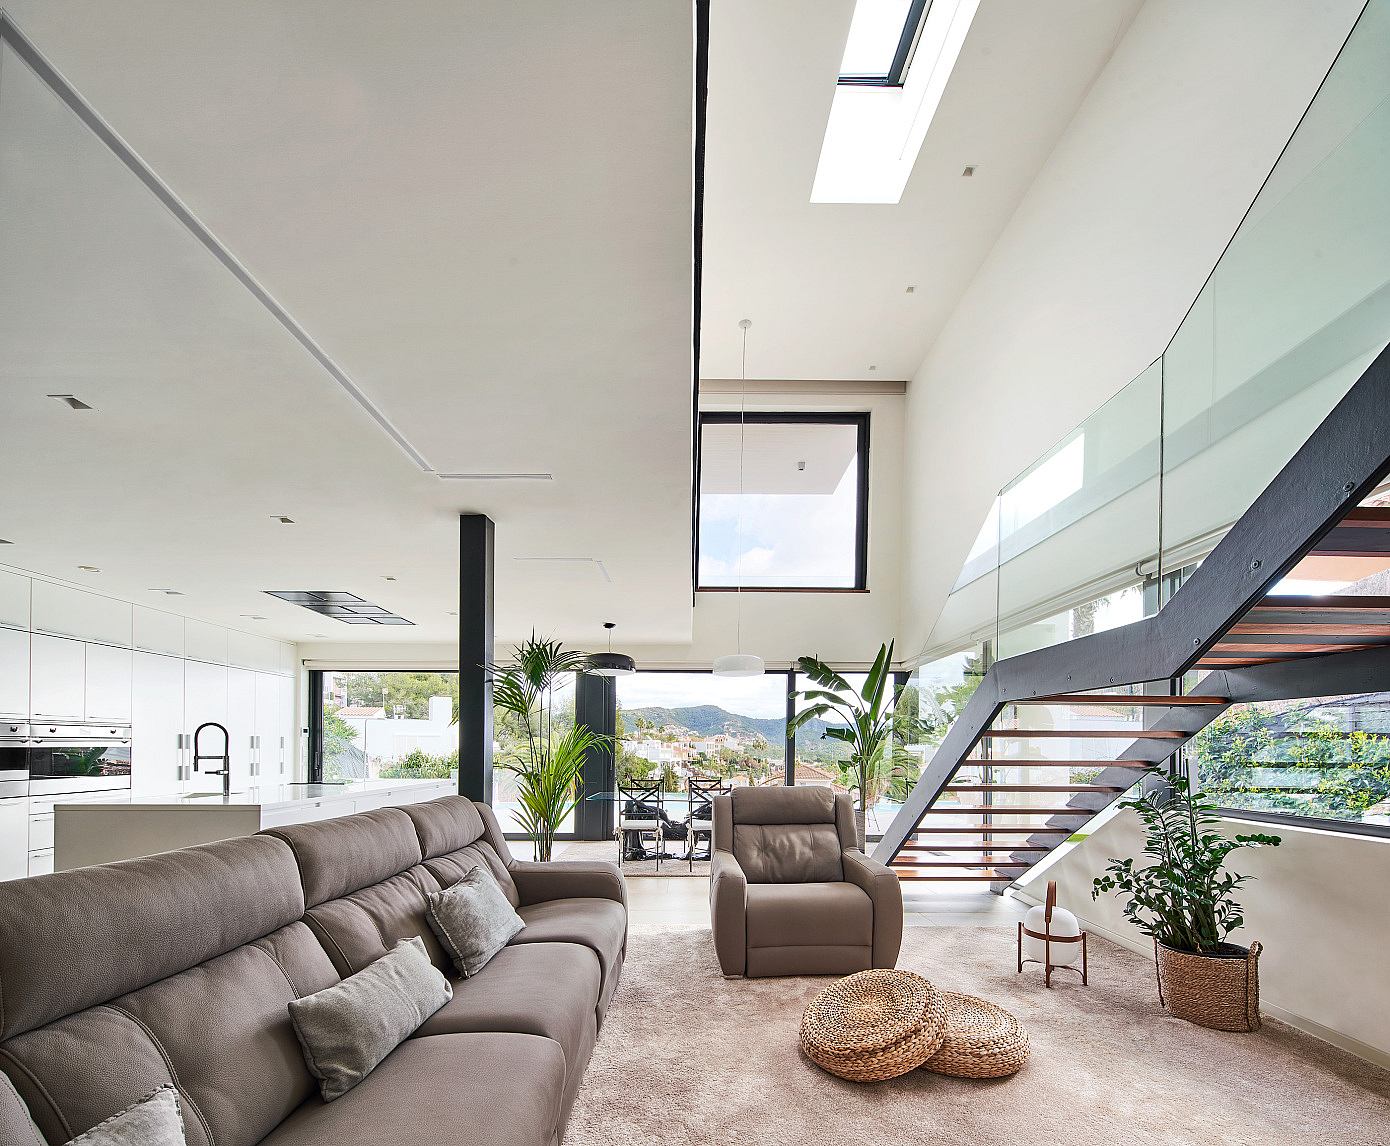 Casa PR by Guillem Carrera Arquitecte